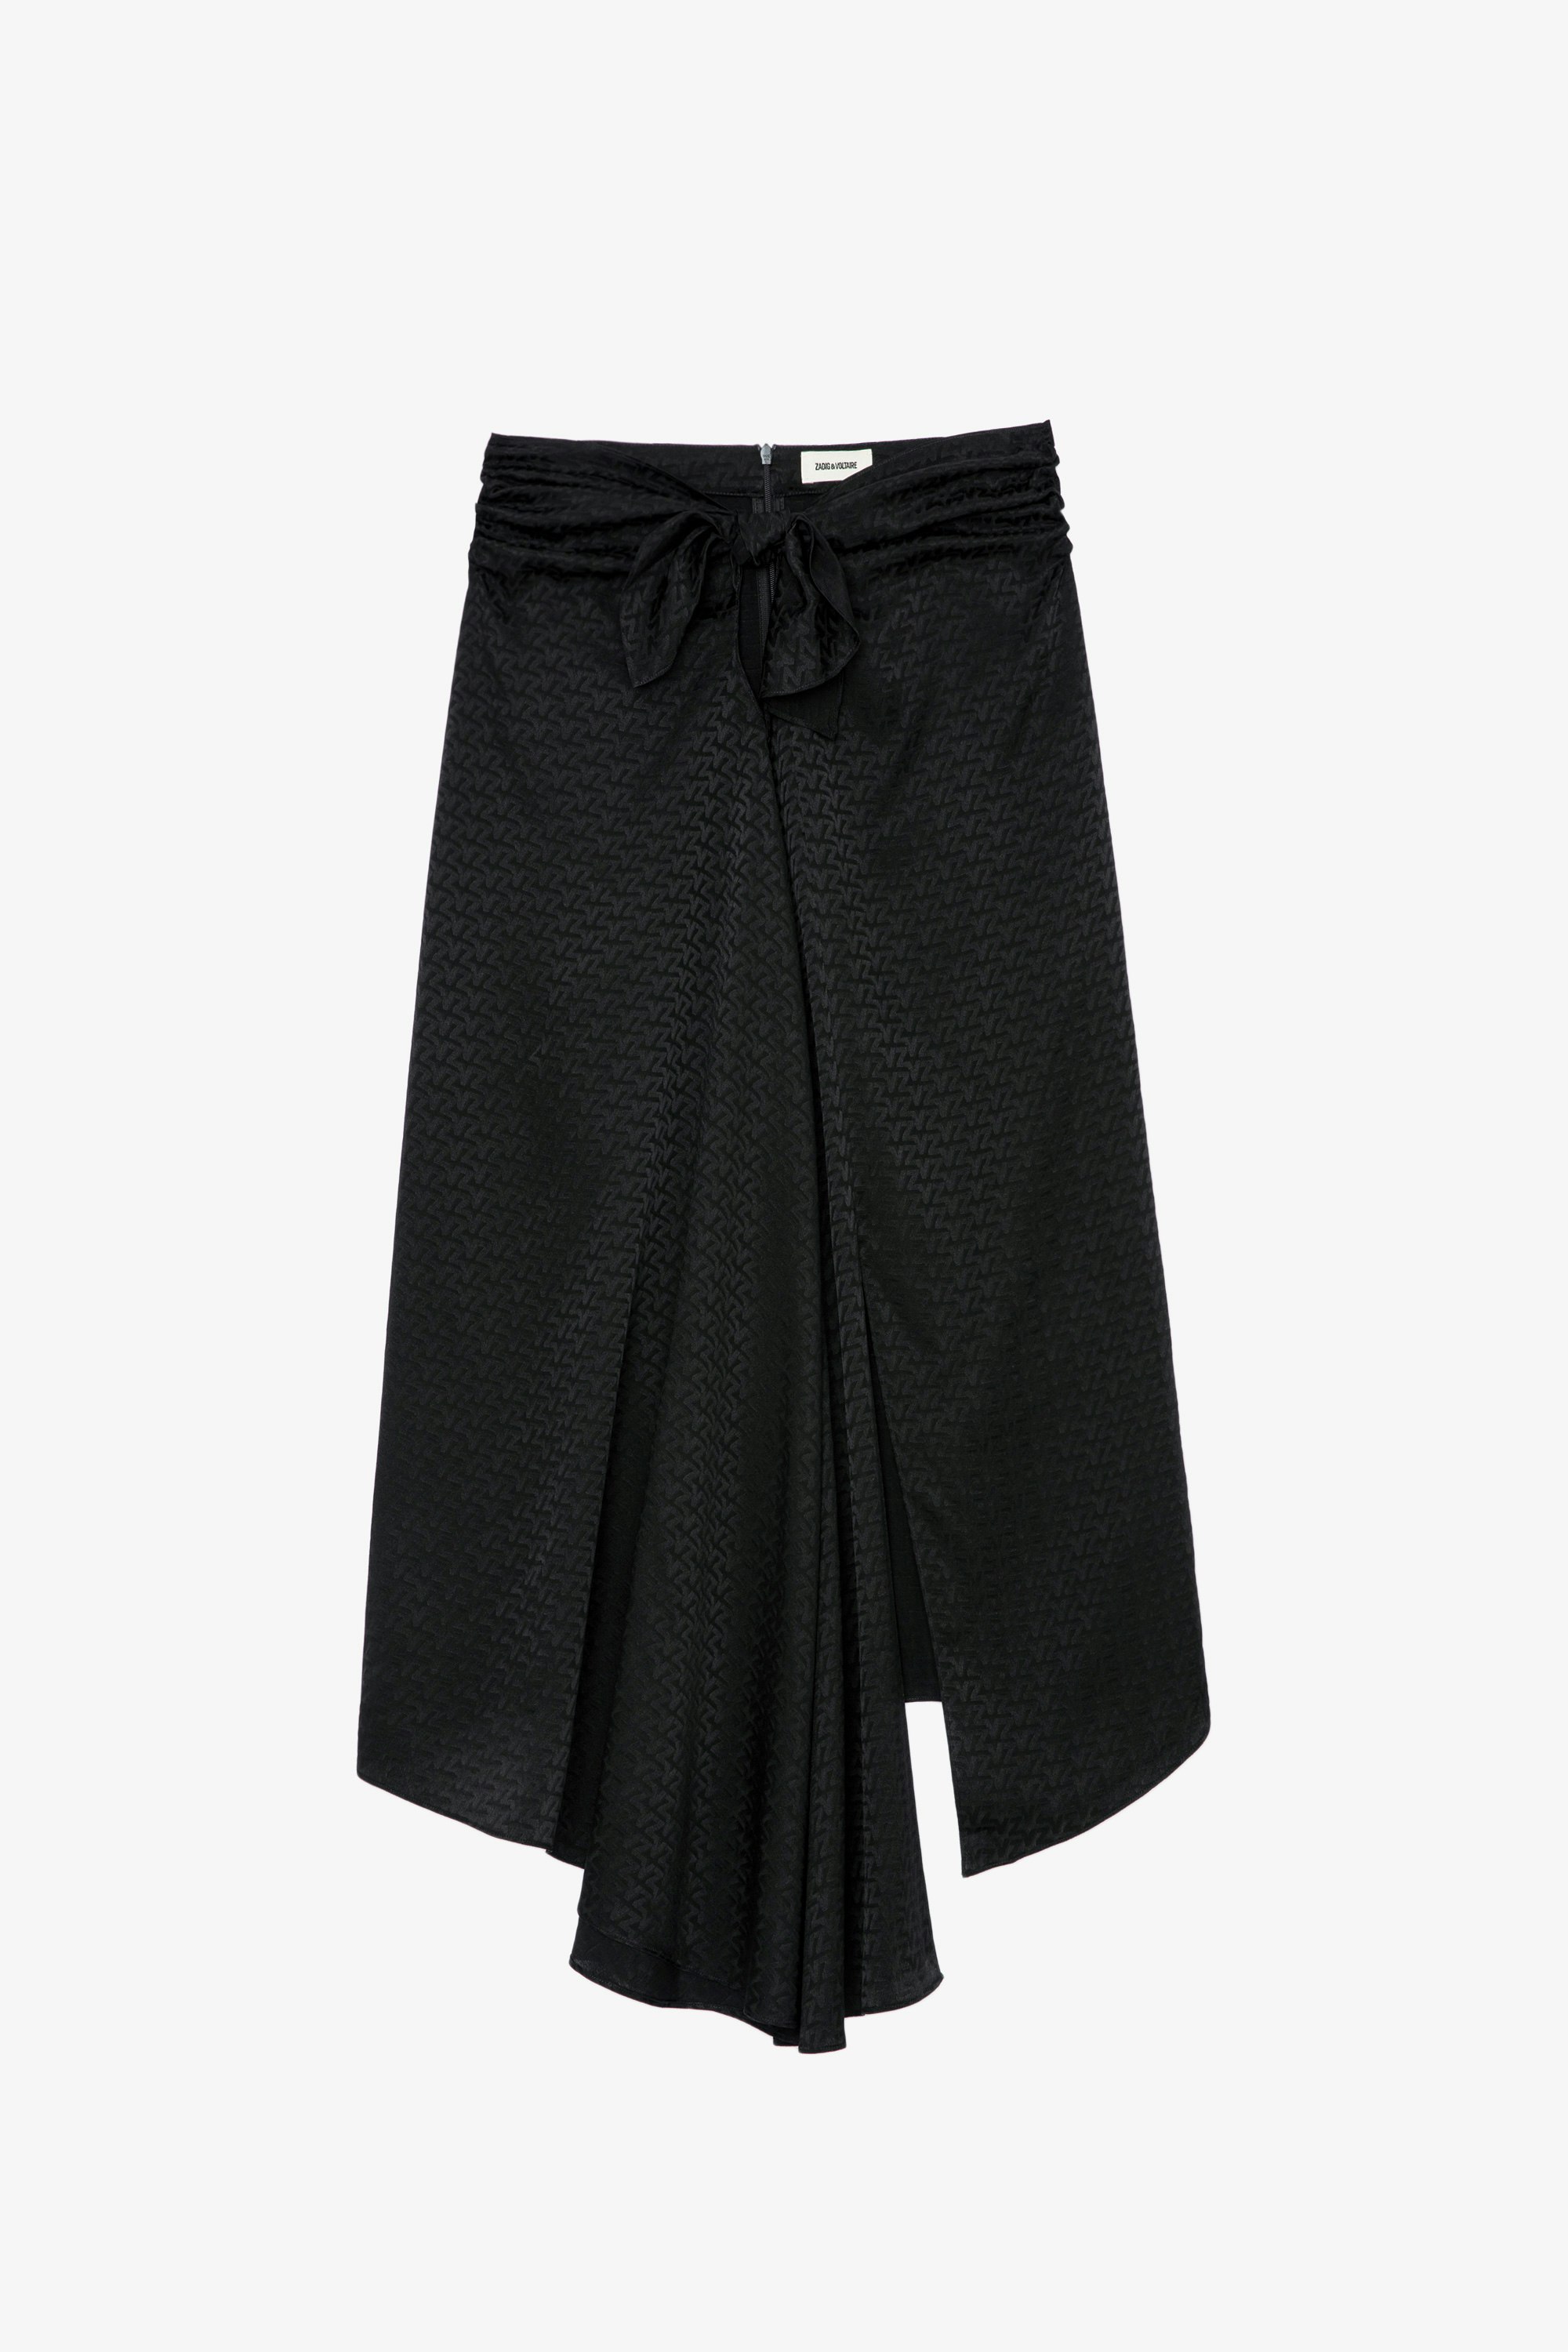 Janais Jac ZV Skirt Women's black draped and tied skirt in ZV jacquard 